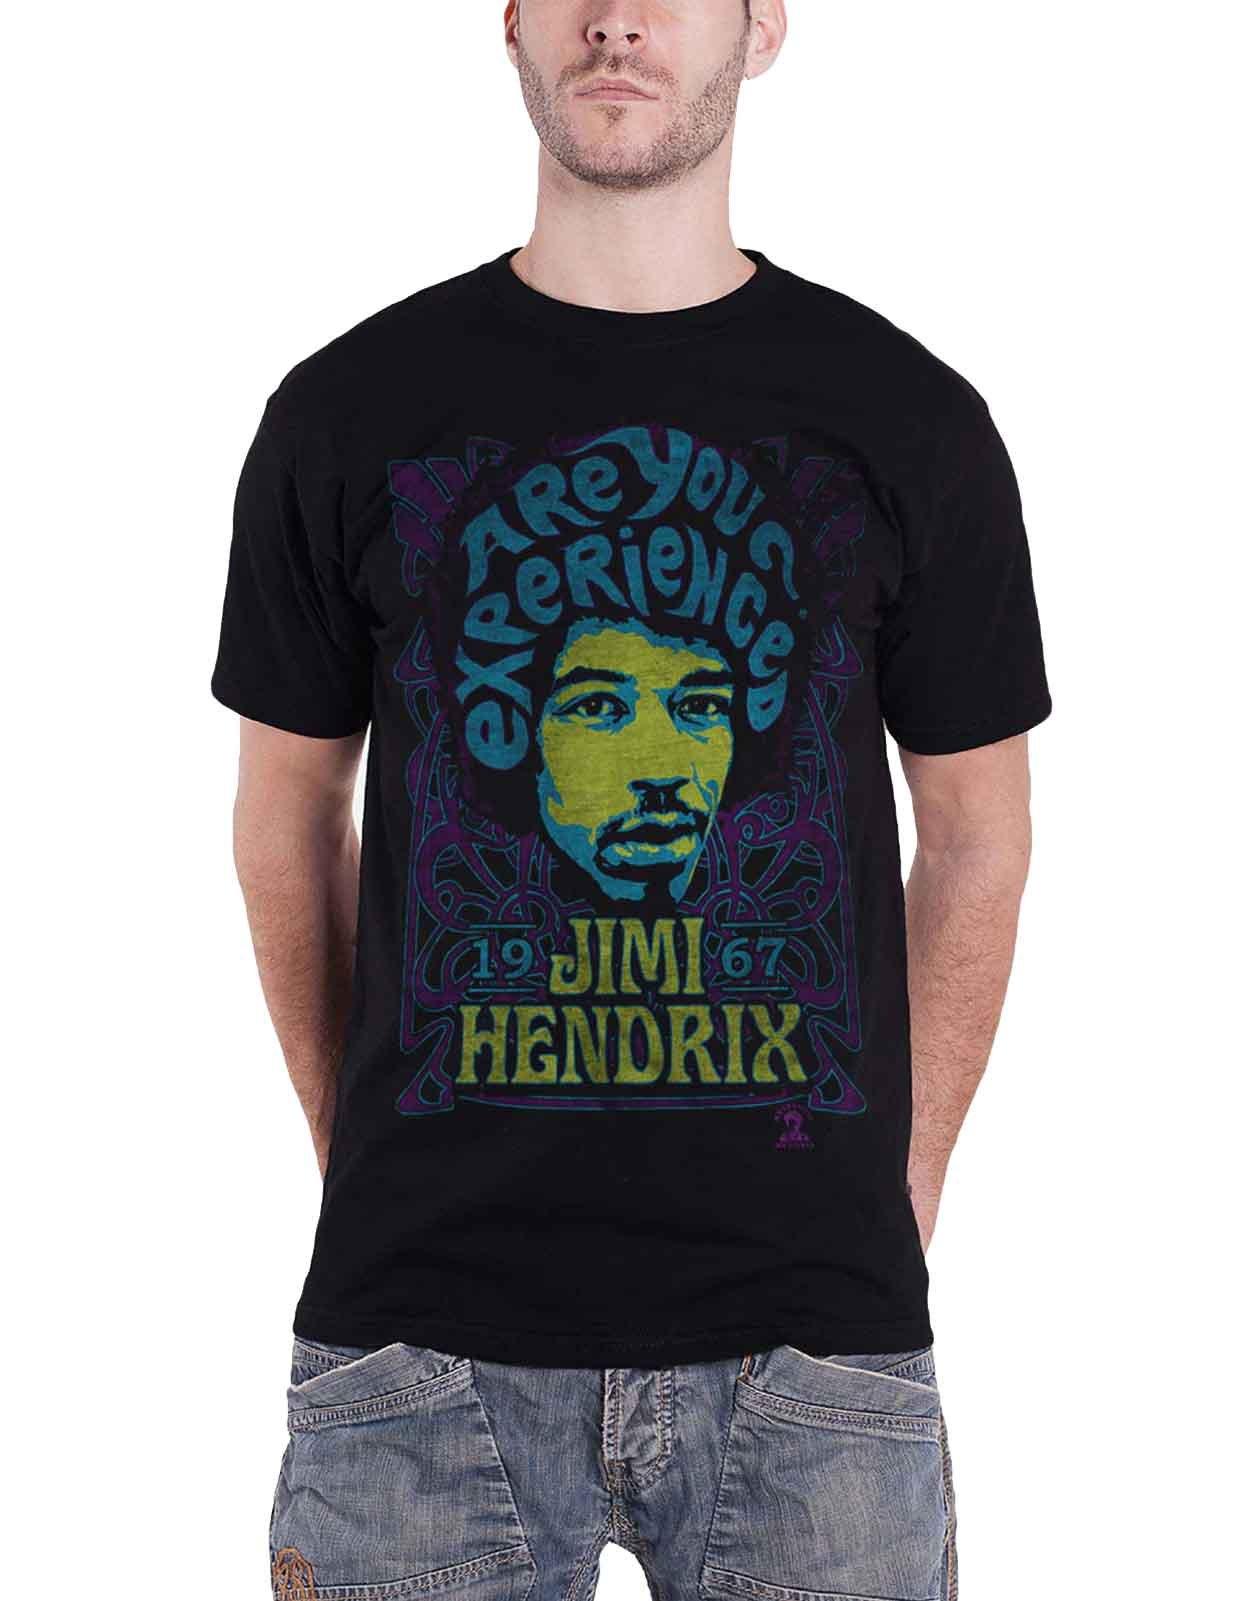 Футболка Are You Experienced 1967 года Jimi Hendrix, черный футболка вы опытный jimi hendrix желтый